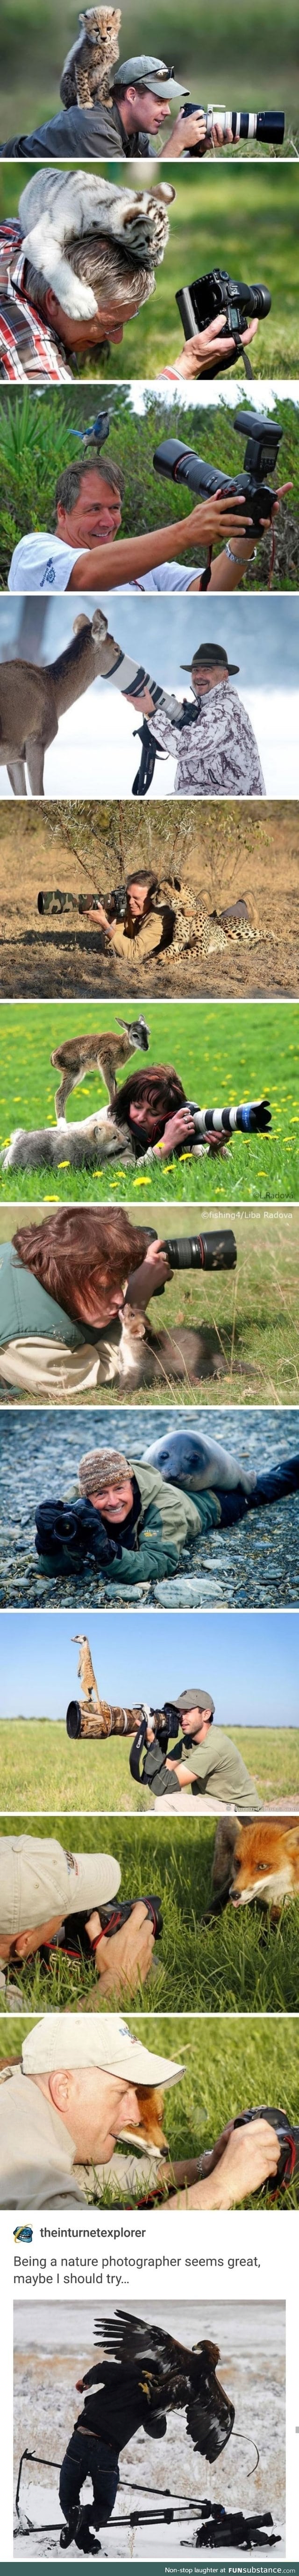 Nature photographers with animals